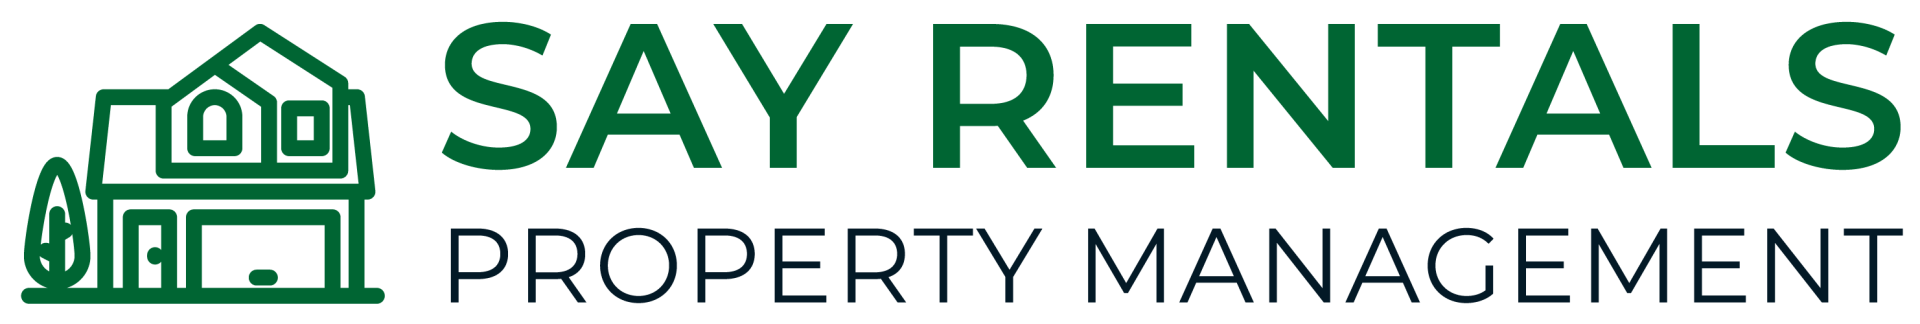 Say Rentals Property Management Logo